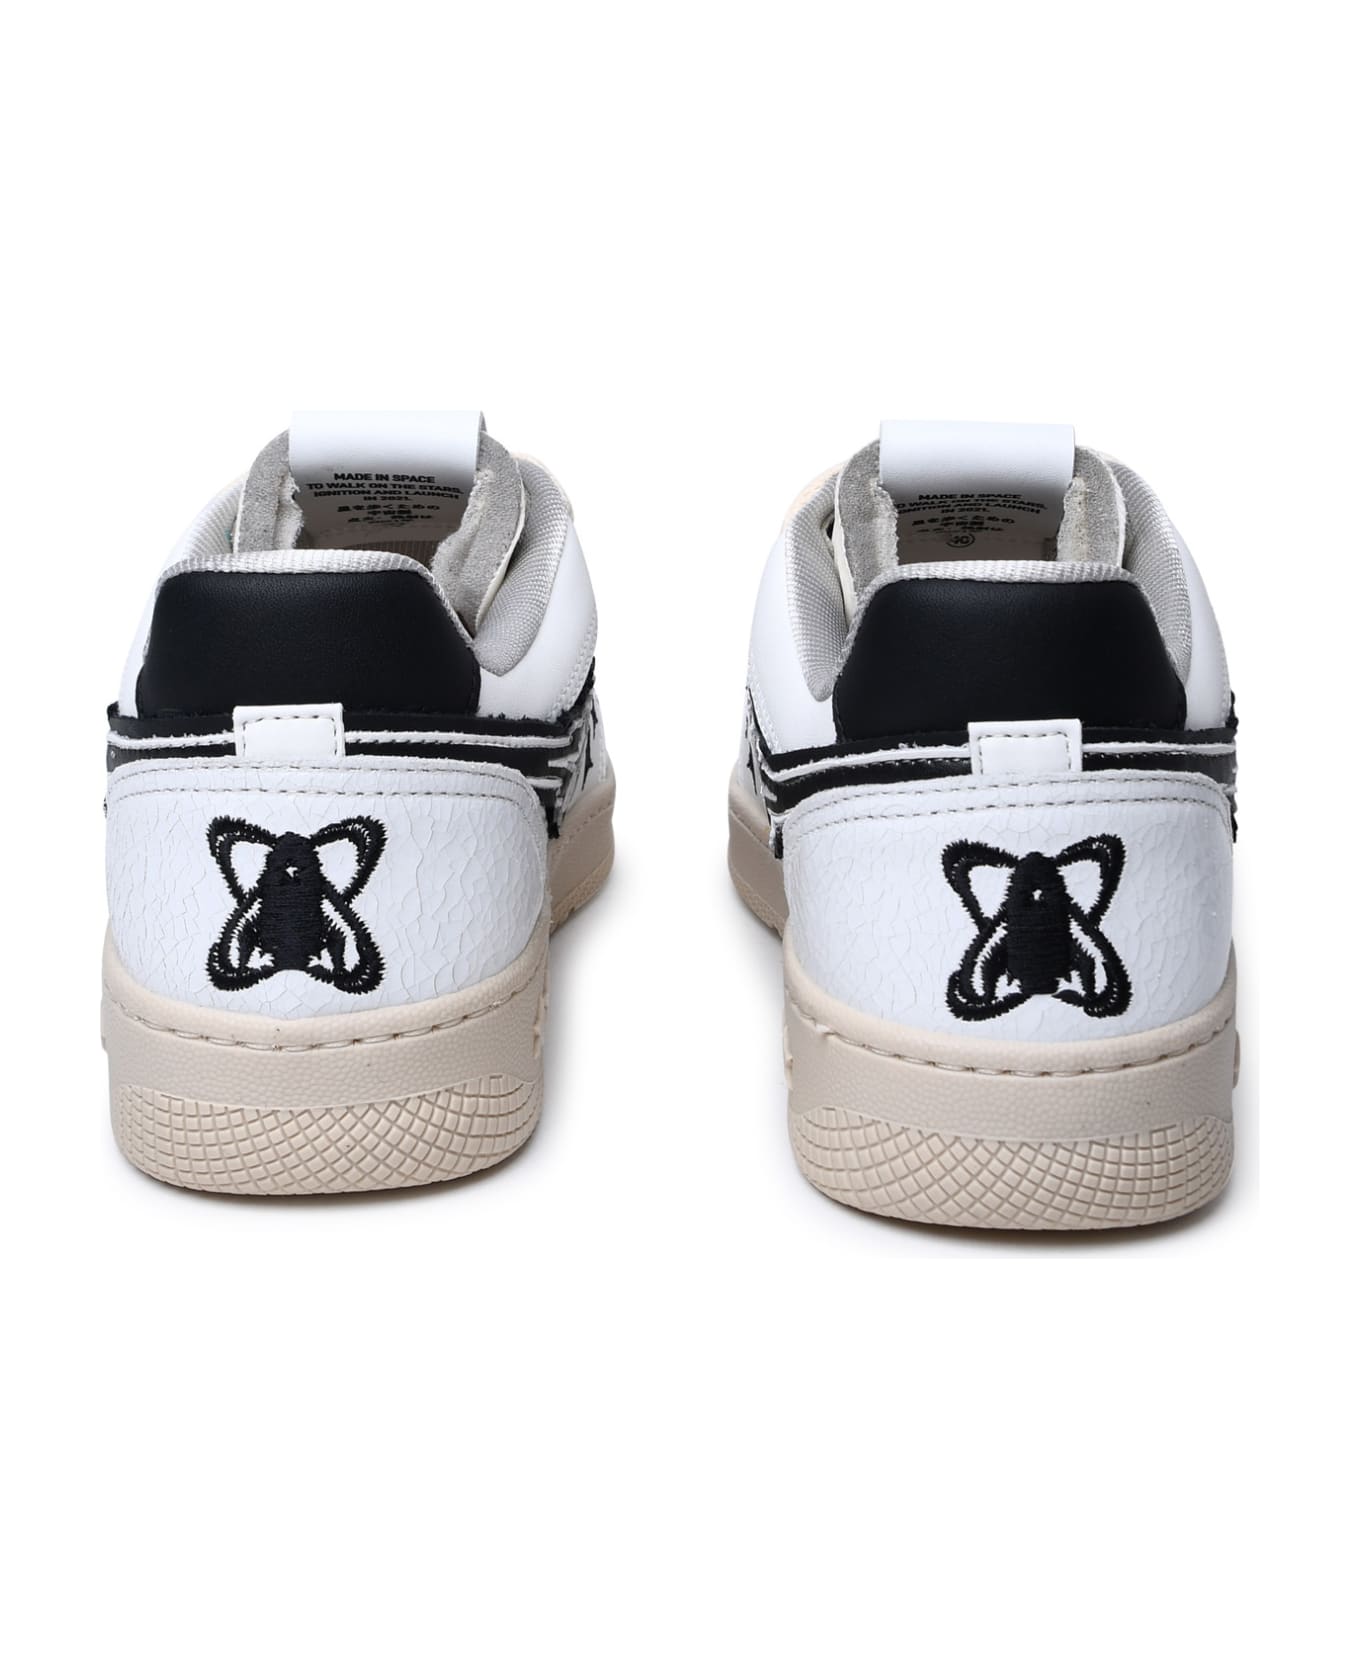 Enterprise Japan White Leather Sneakers - White スニーカー